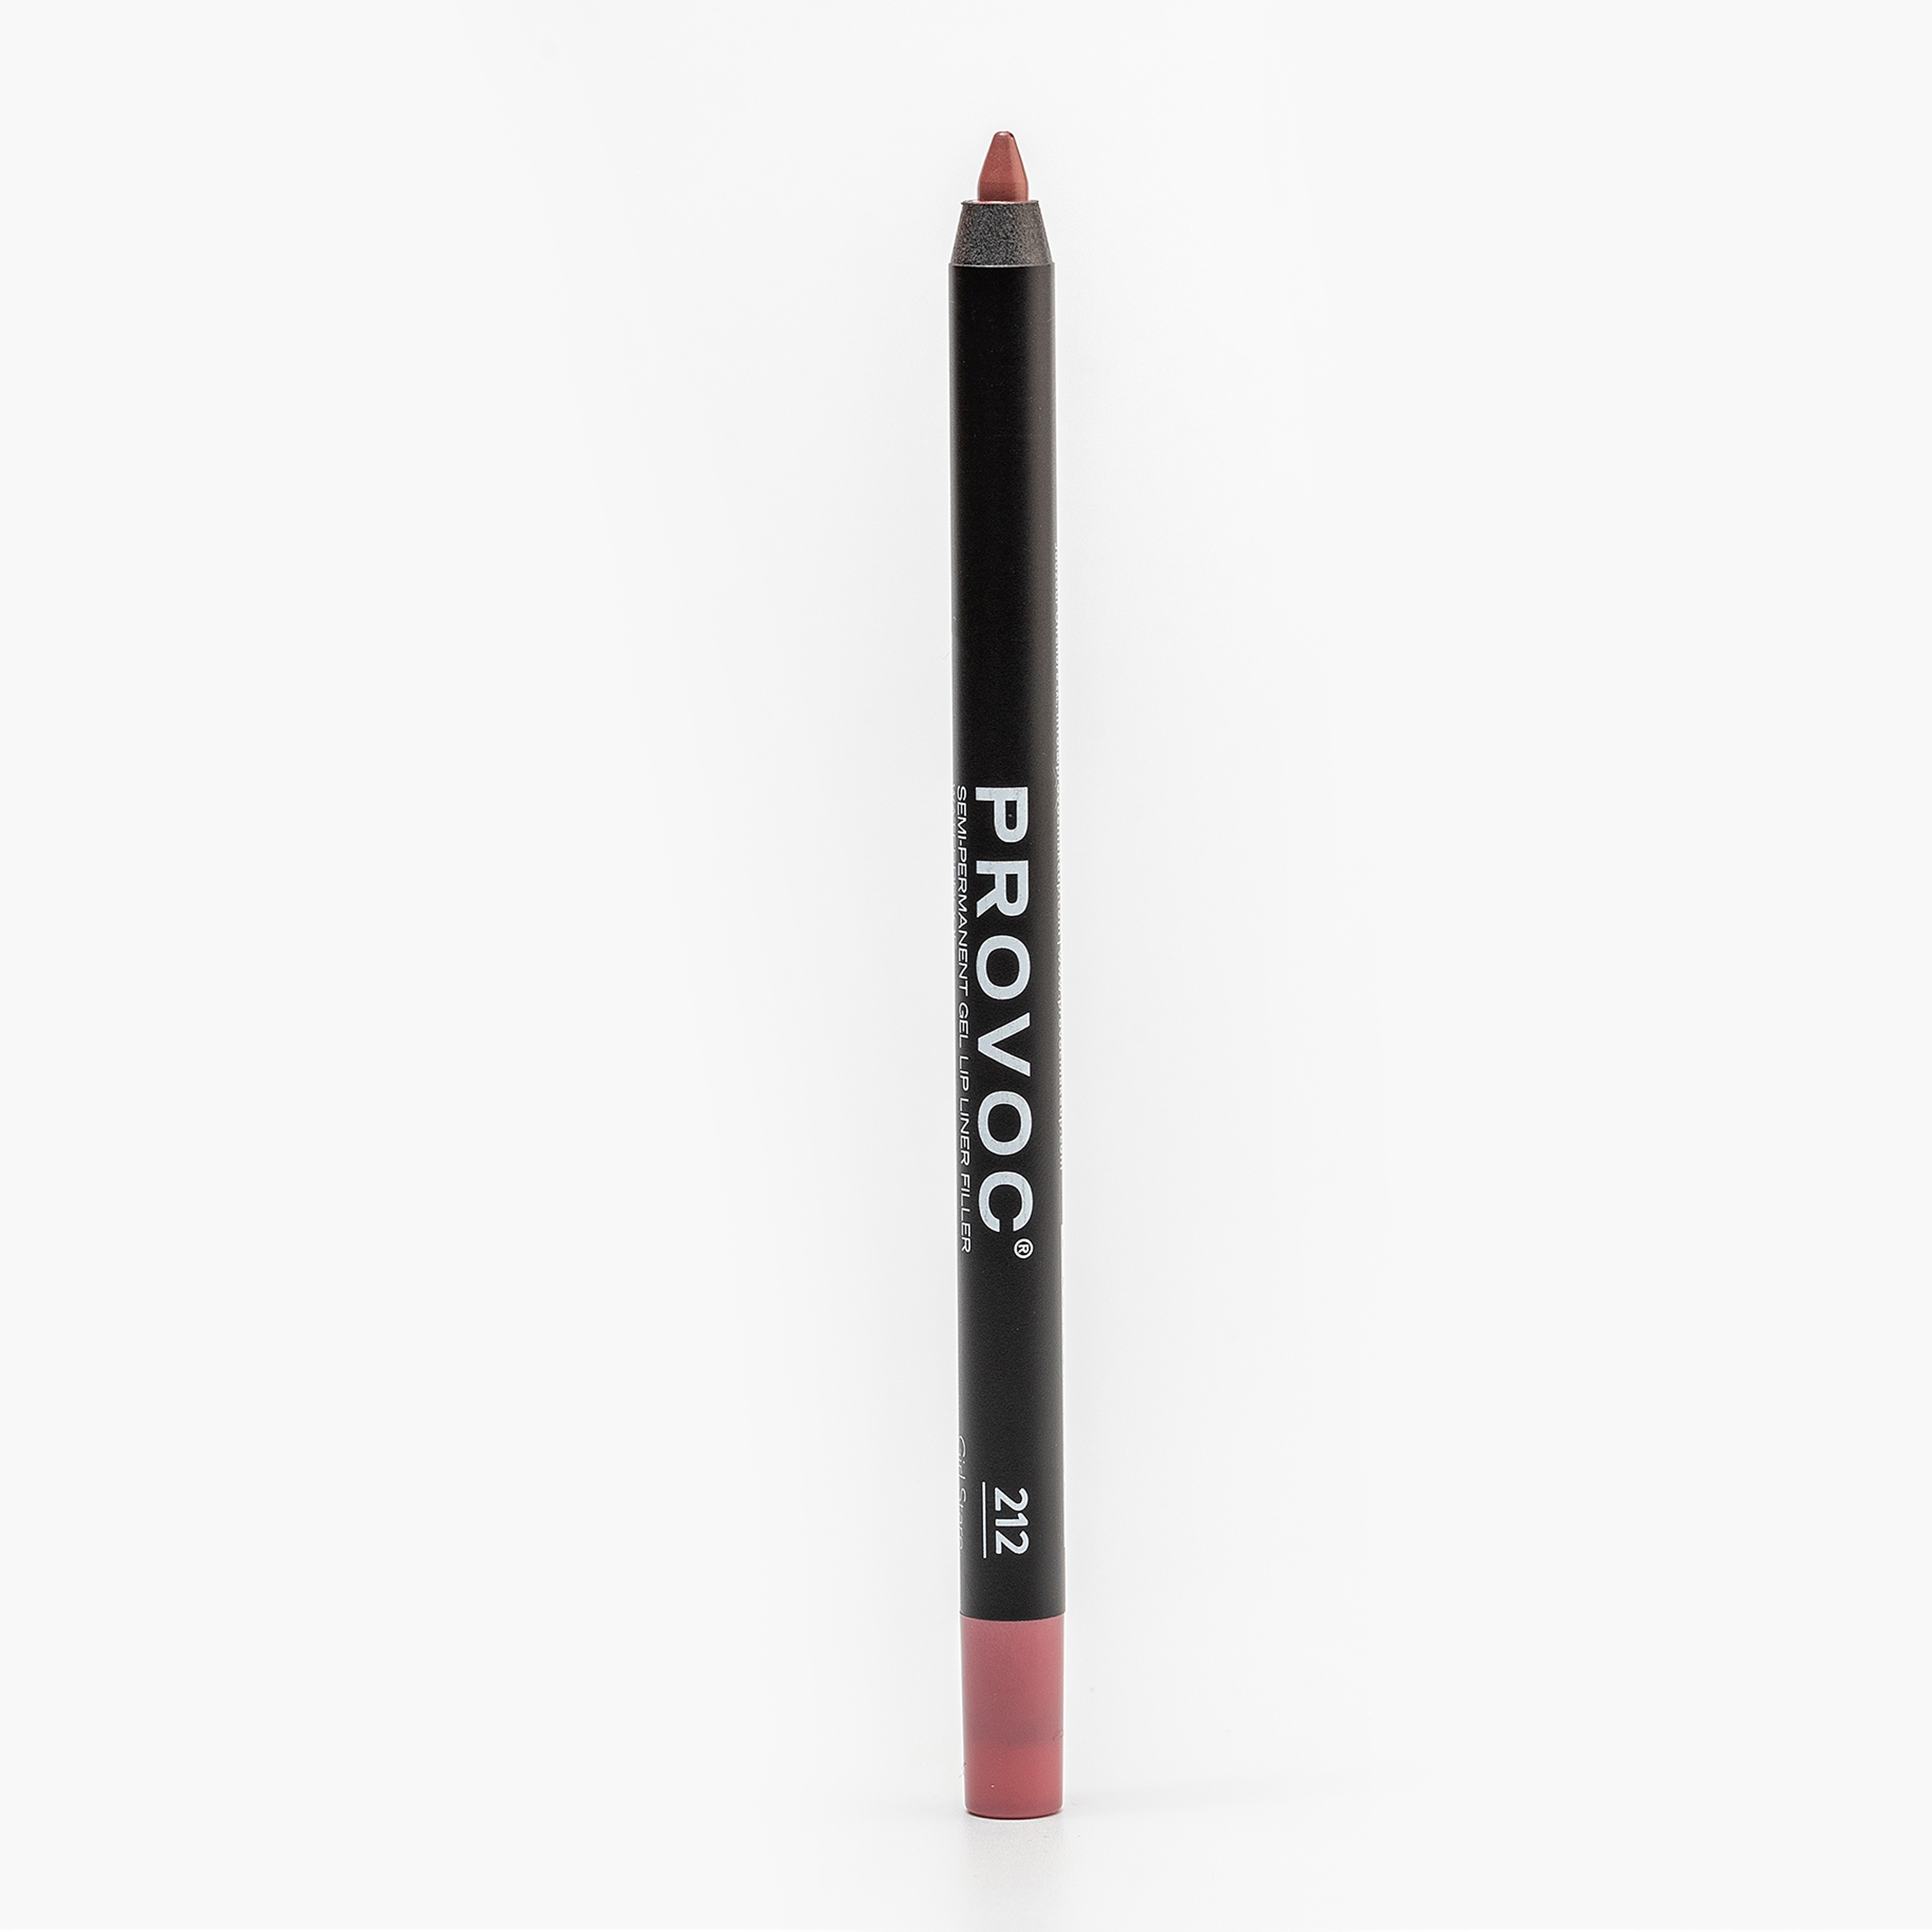 Карандаш для губ PROVOC Gel Lip Liner гелевый, №212 Girl Stare натурально-розовый, 1,2 г карандаш для губ provoc gel lip liner гелевый 18 irresistible натурально розовый 1 2 г